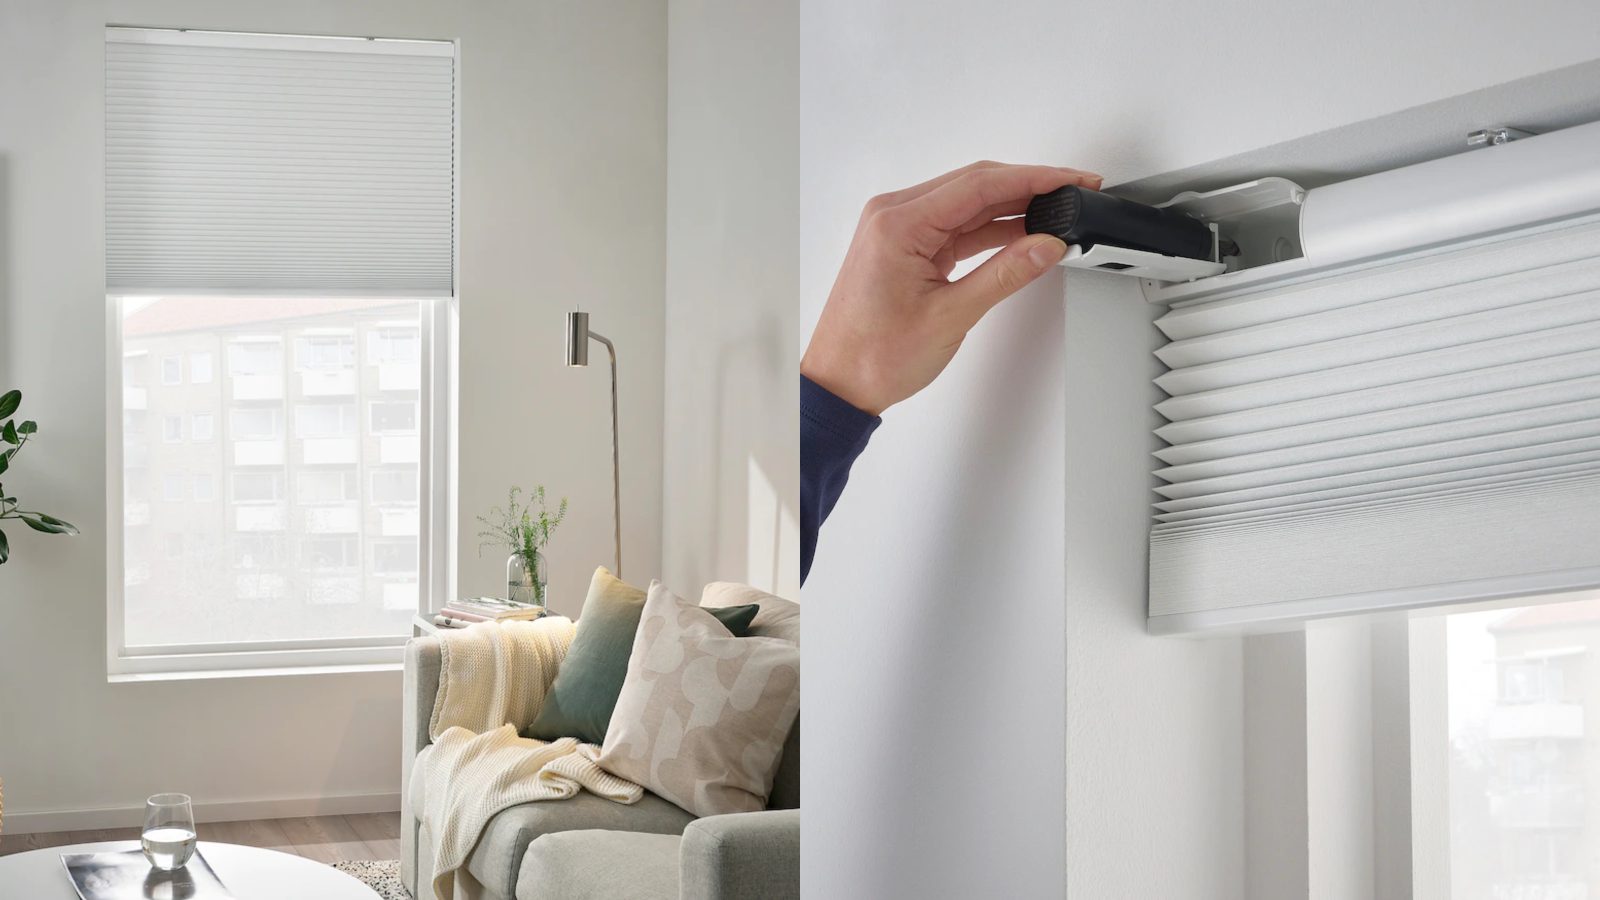 New IKEA smart blinds with HomeKit